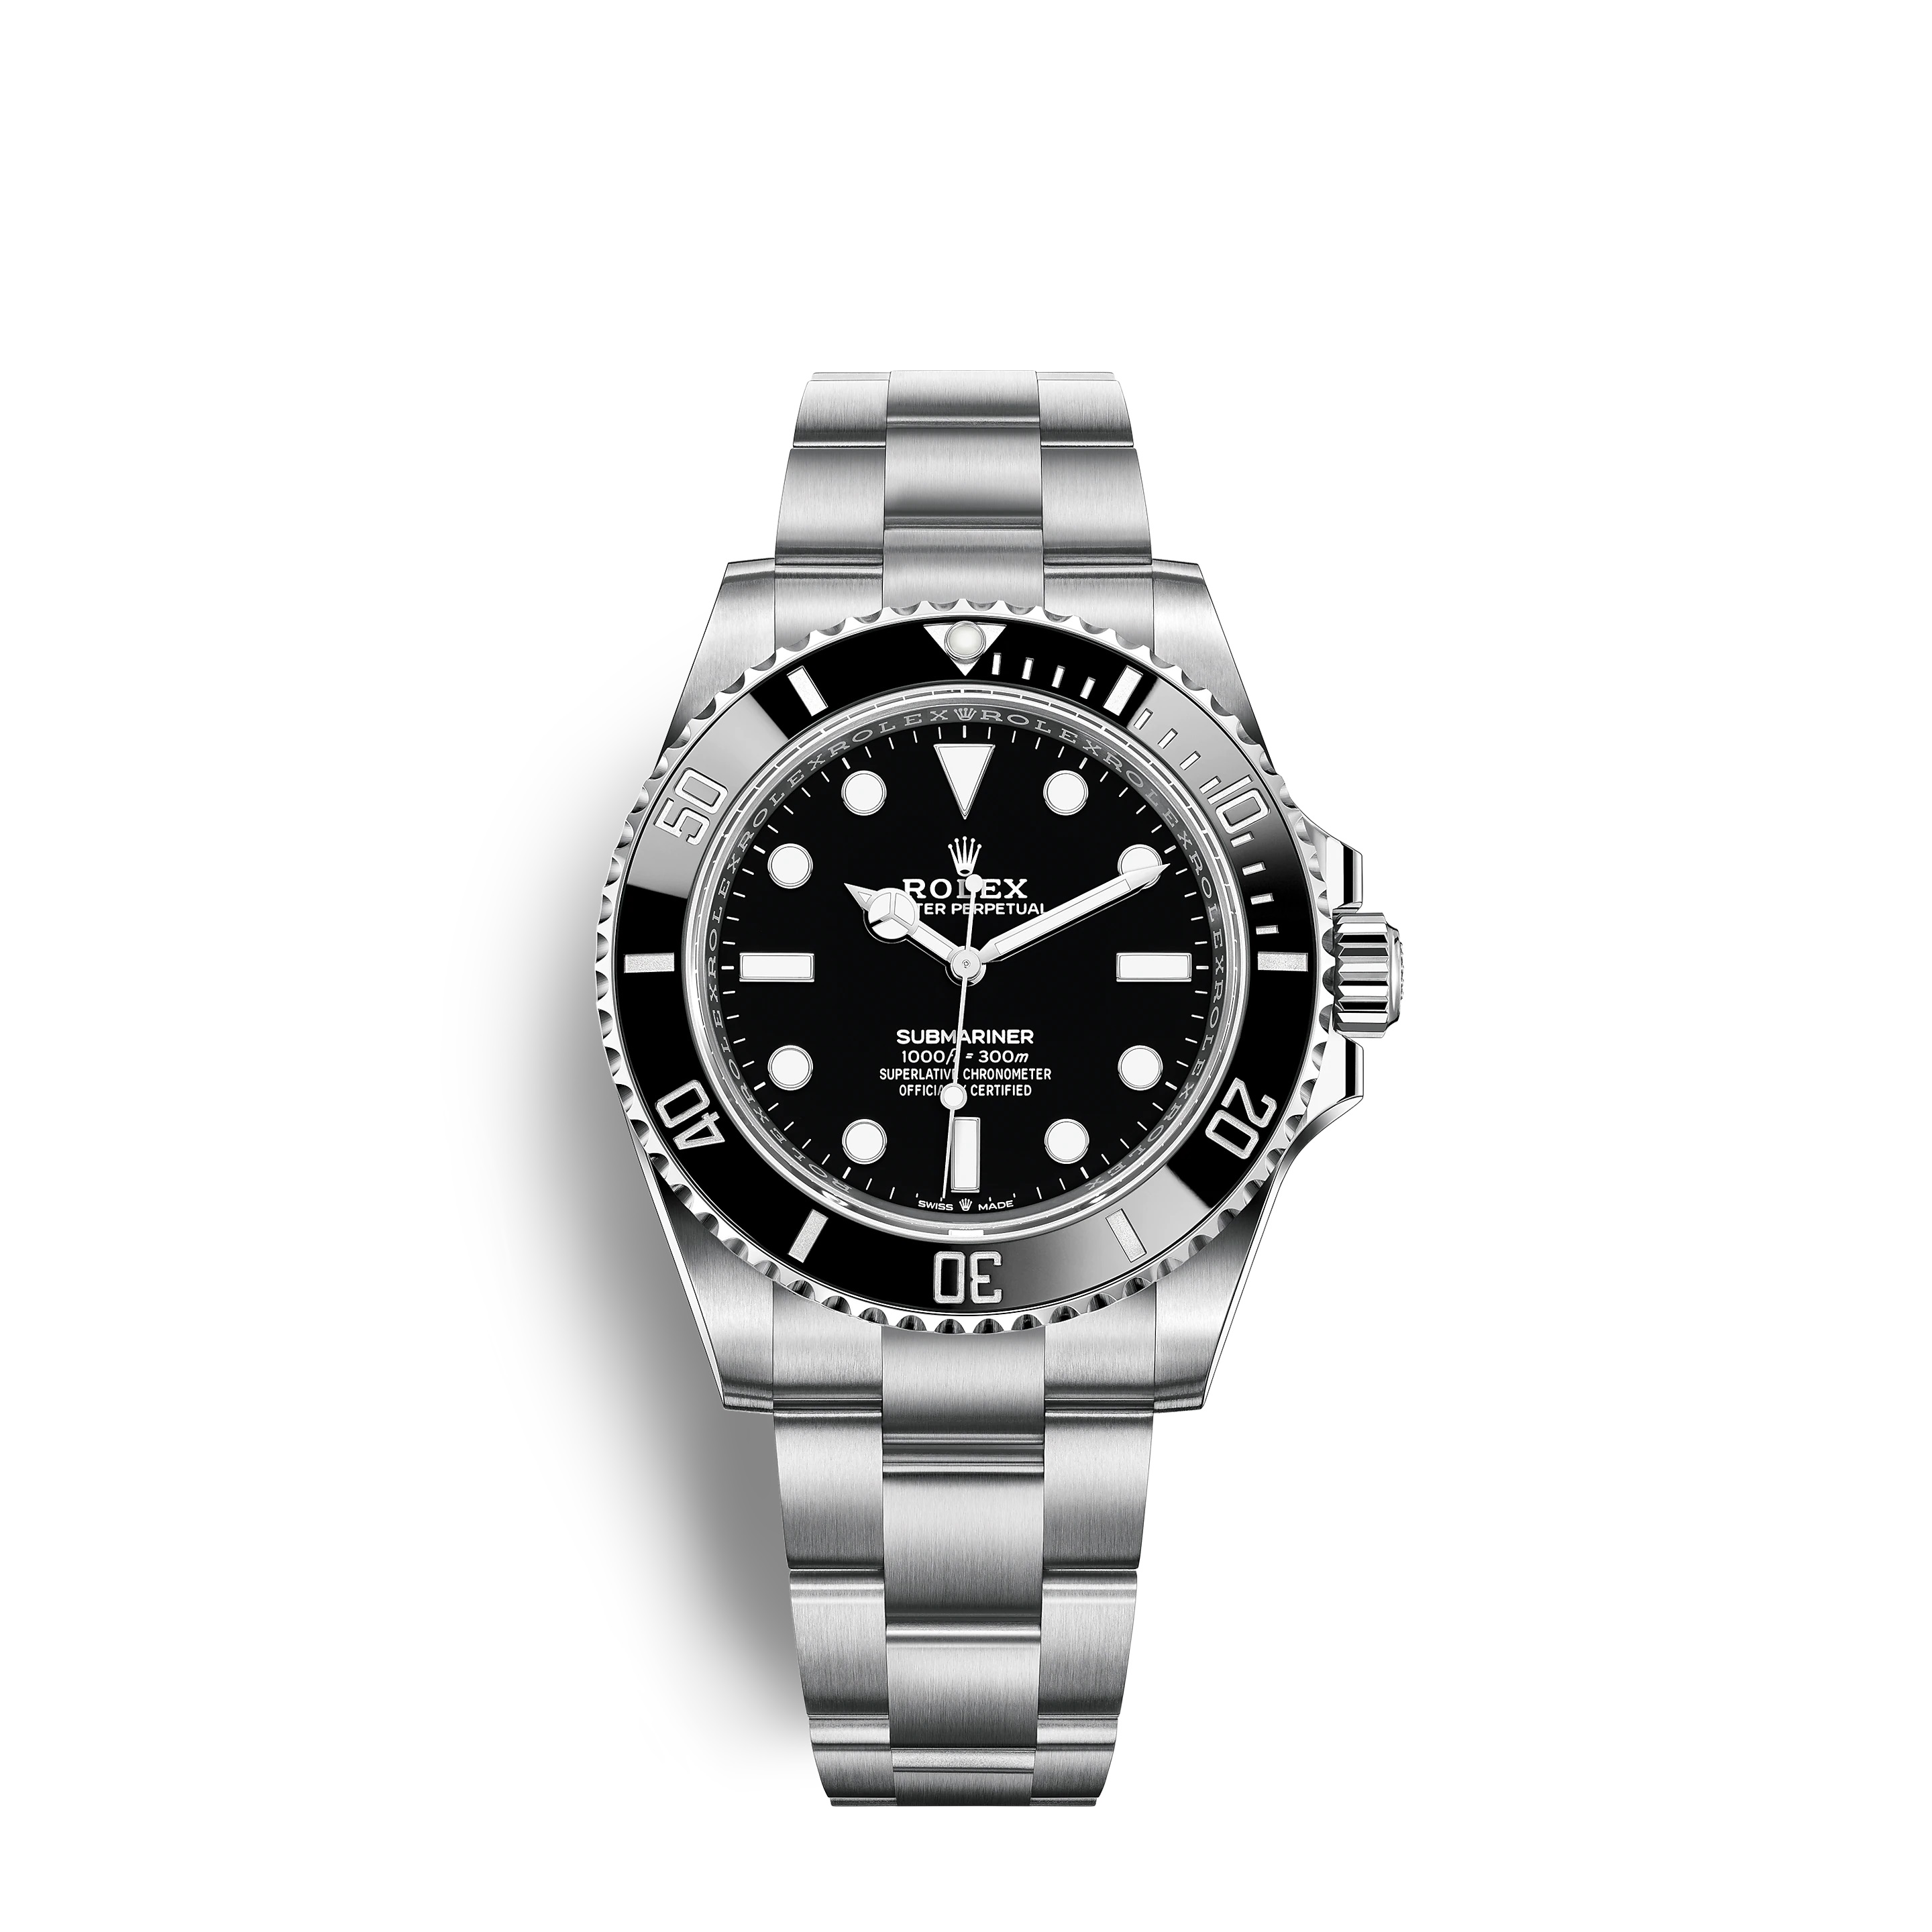 Submariner Date 126610LN Stainless Steel Watch (Black)